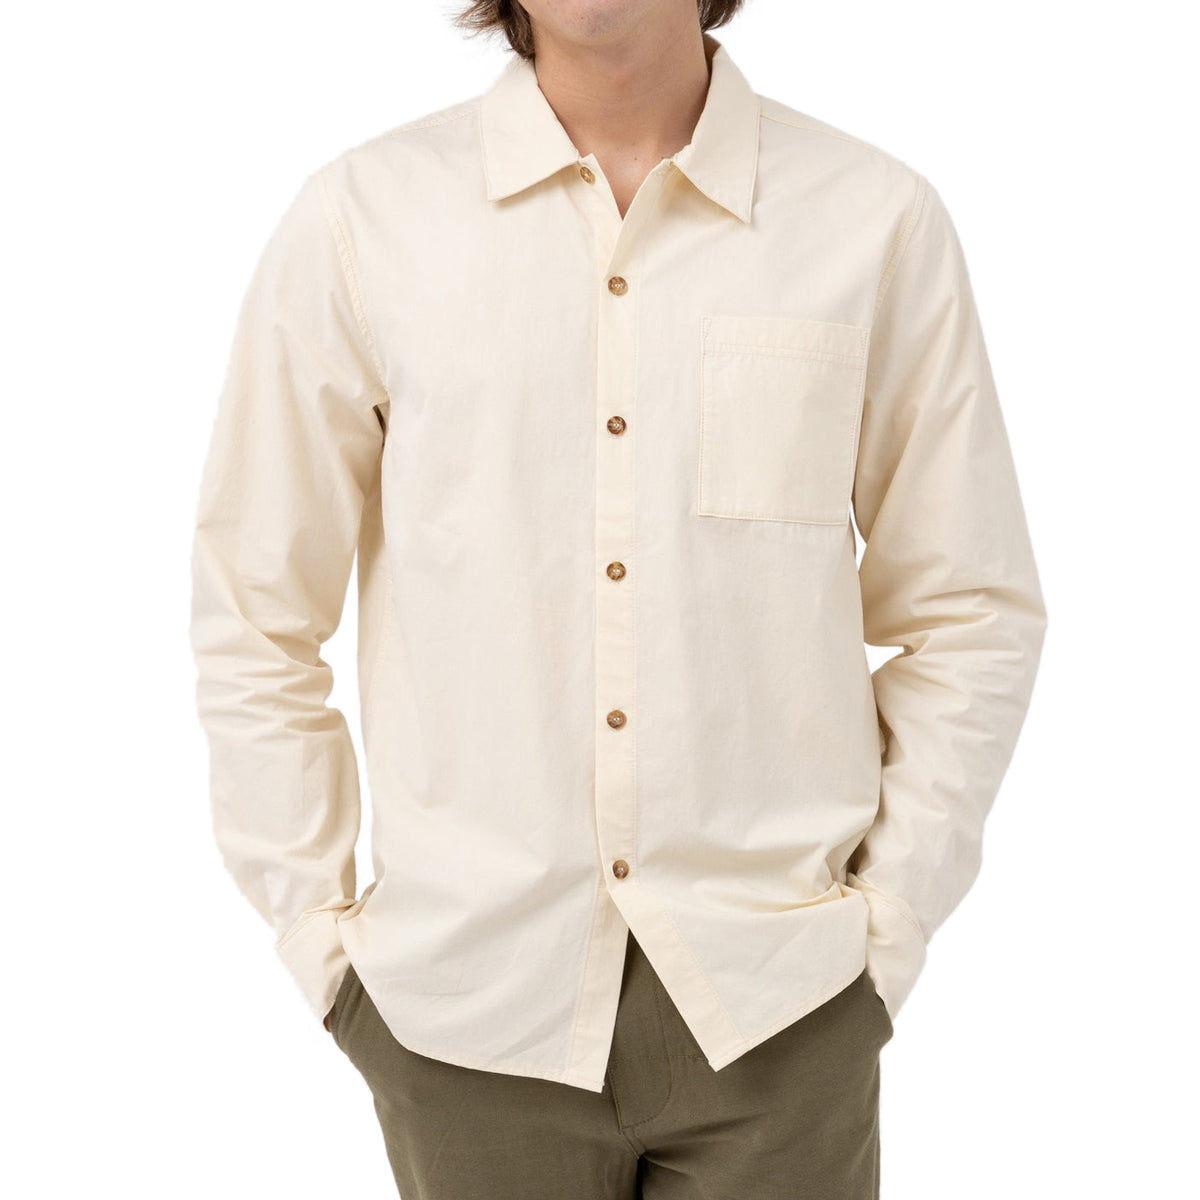 Rhythm Essential Long Sleeve Shirt - Natural image 1